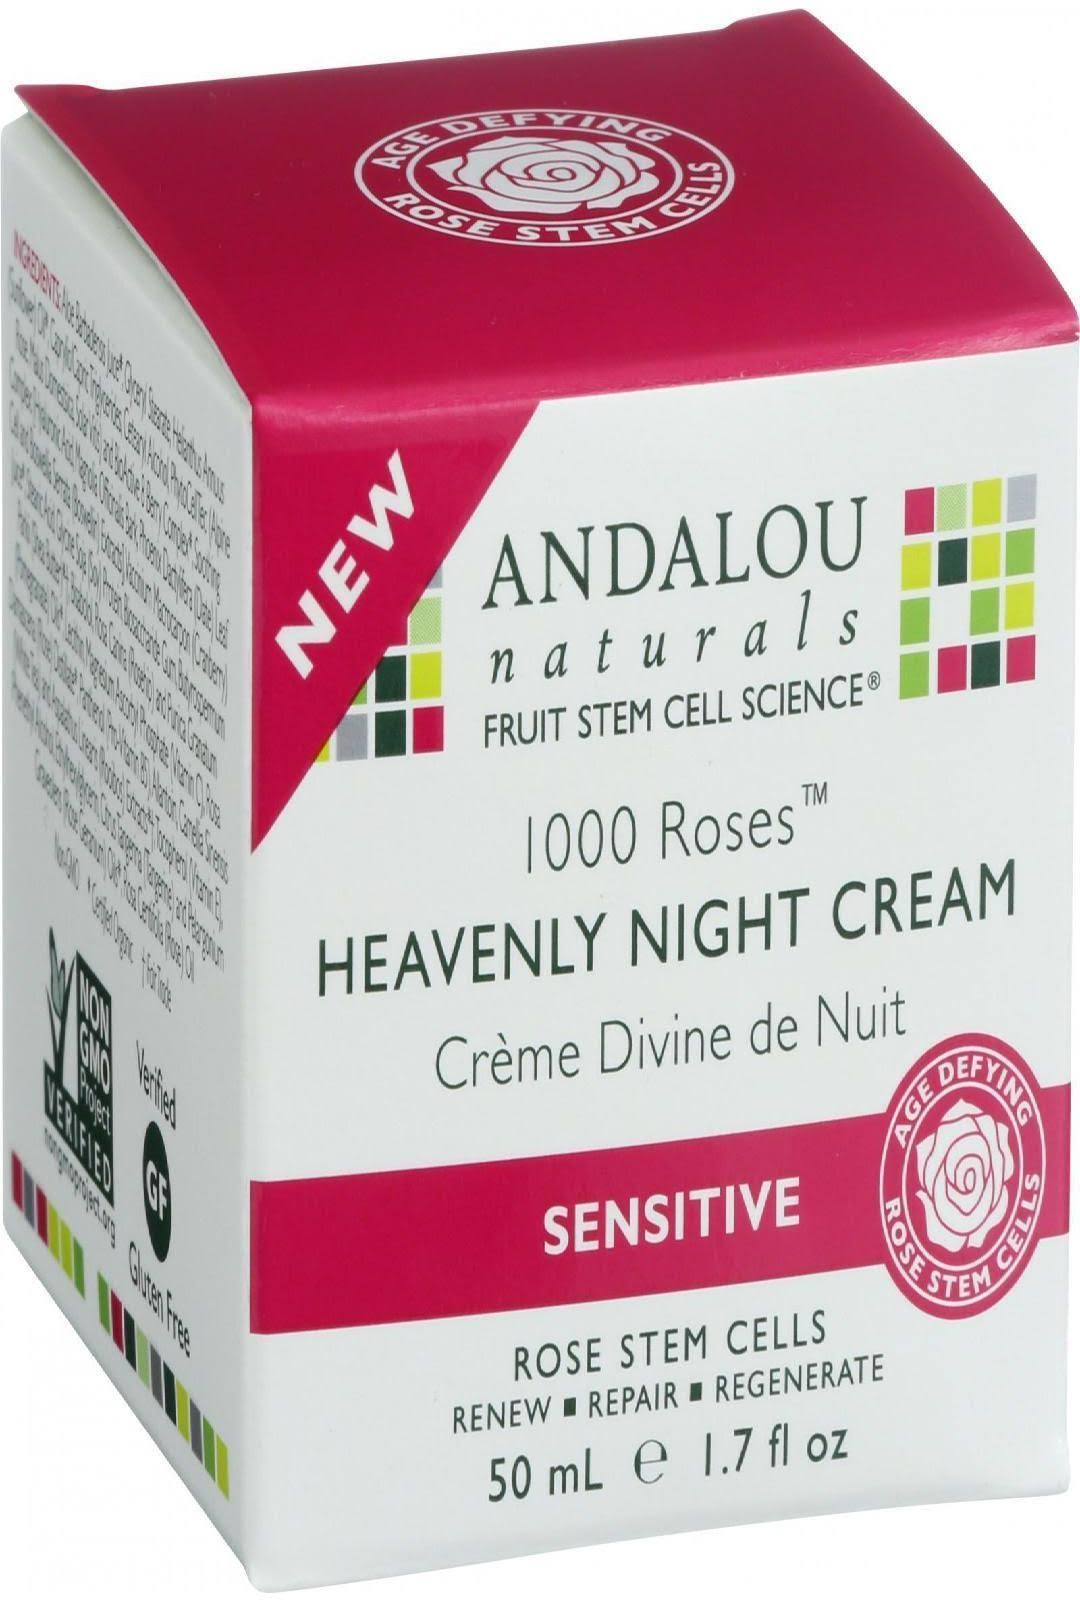 Andalou Naturals Heavenly Night Cream - 1.7oz, 1000 Roses